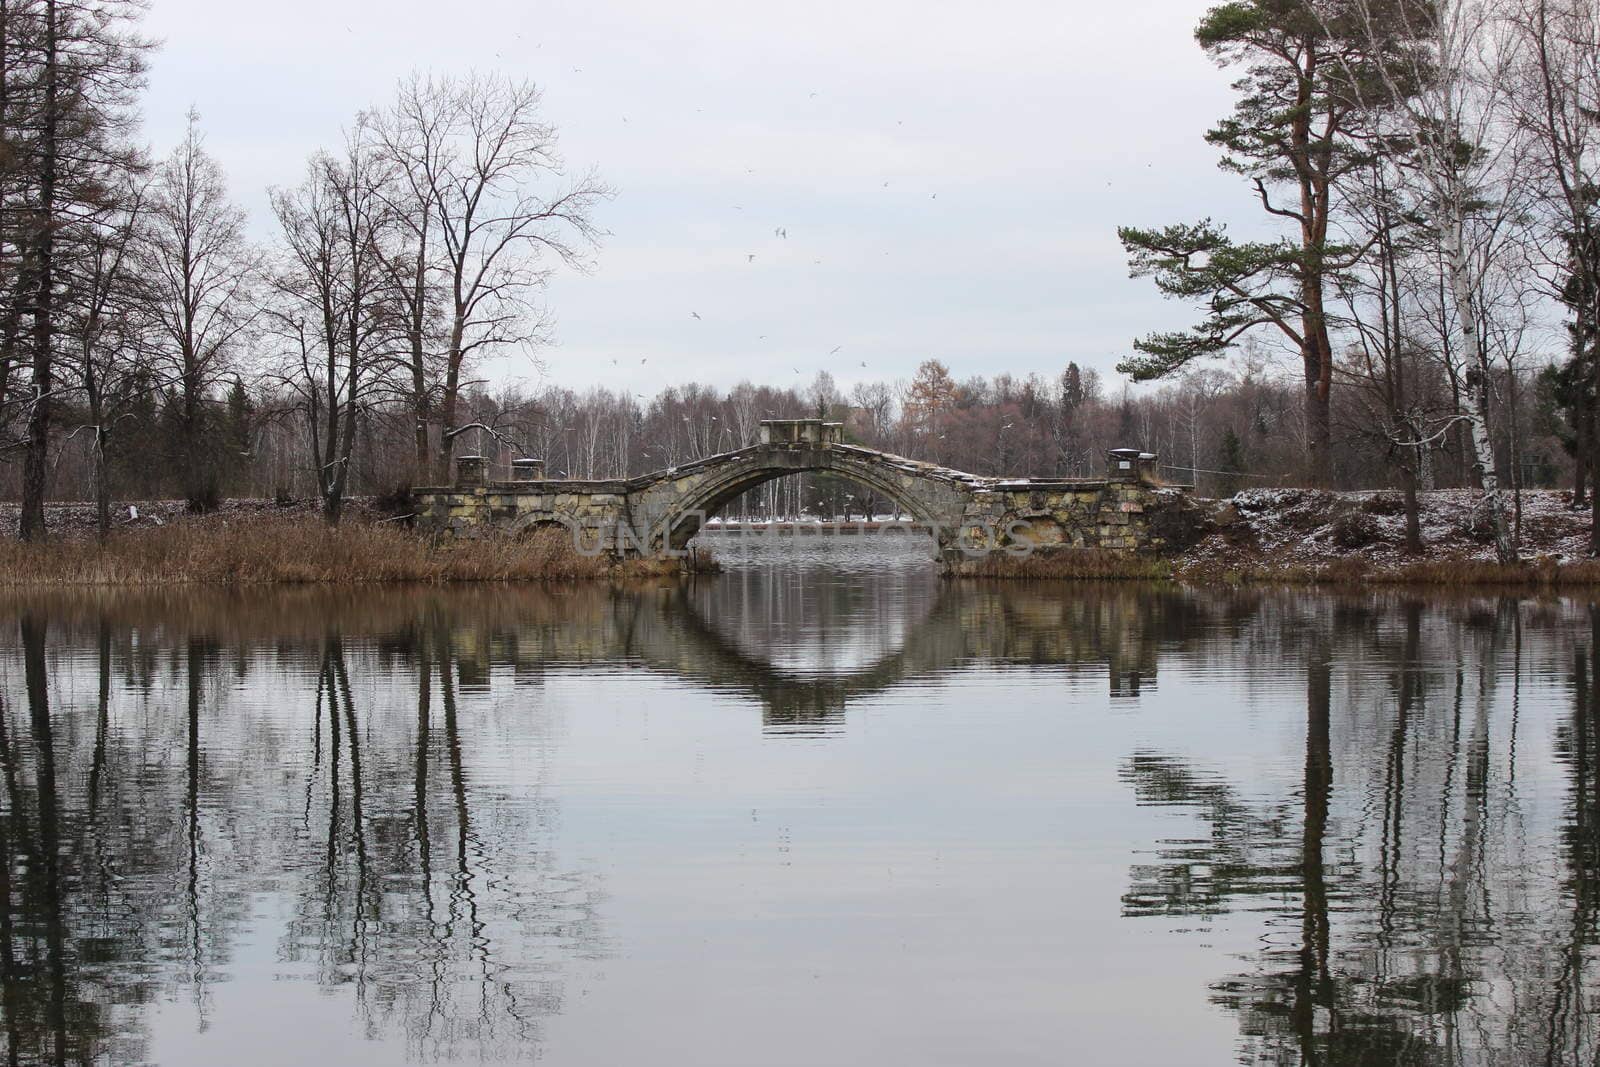 Humpback Bridge in Gatchina park, uniting the two islands in the White Lake. Leningrad, November 2015 by olga_ovchinnikova